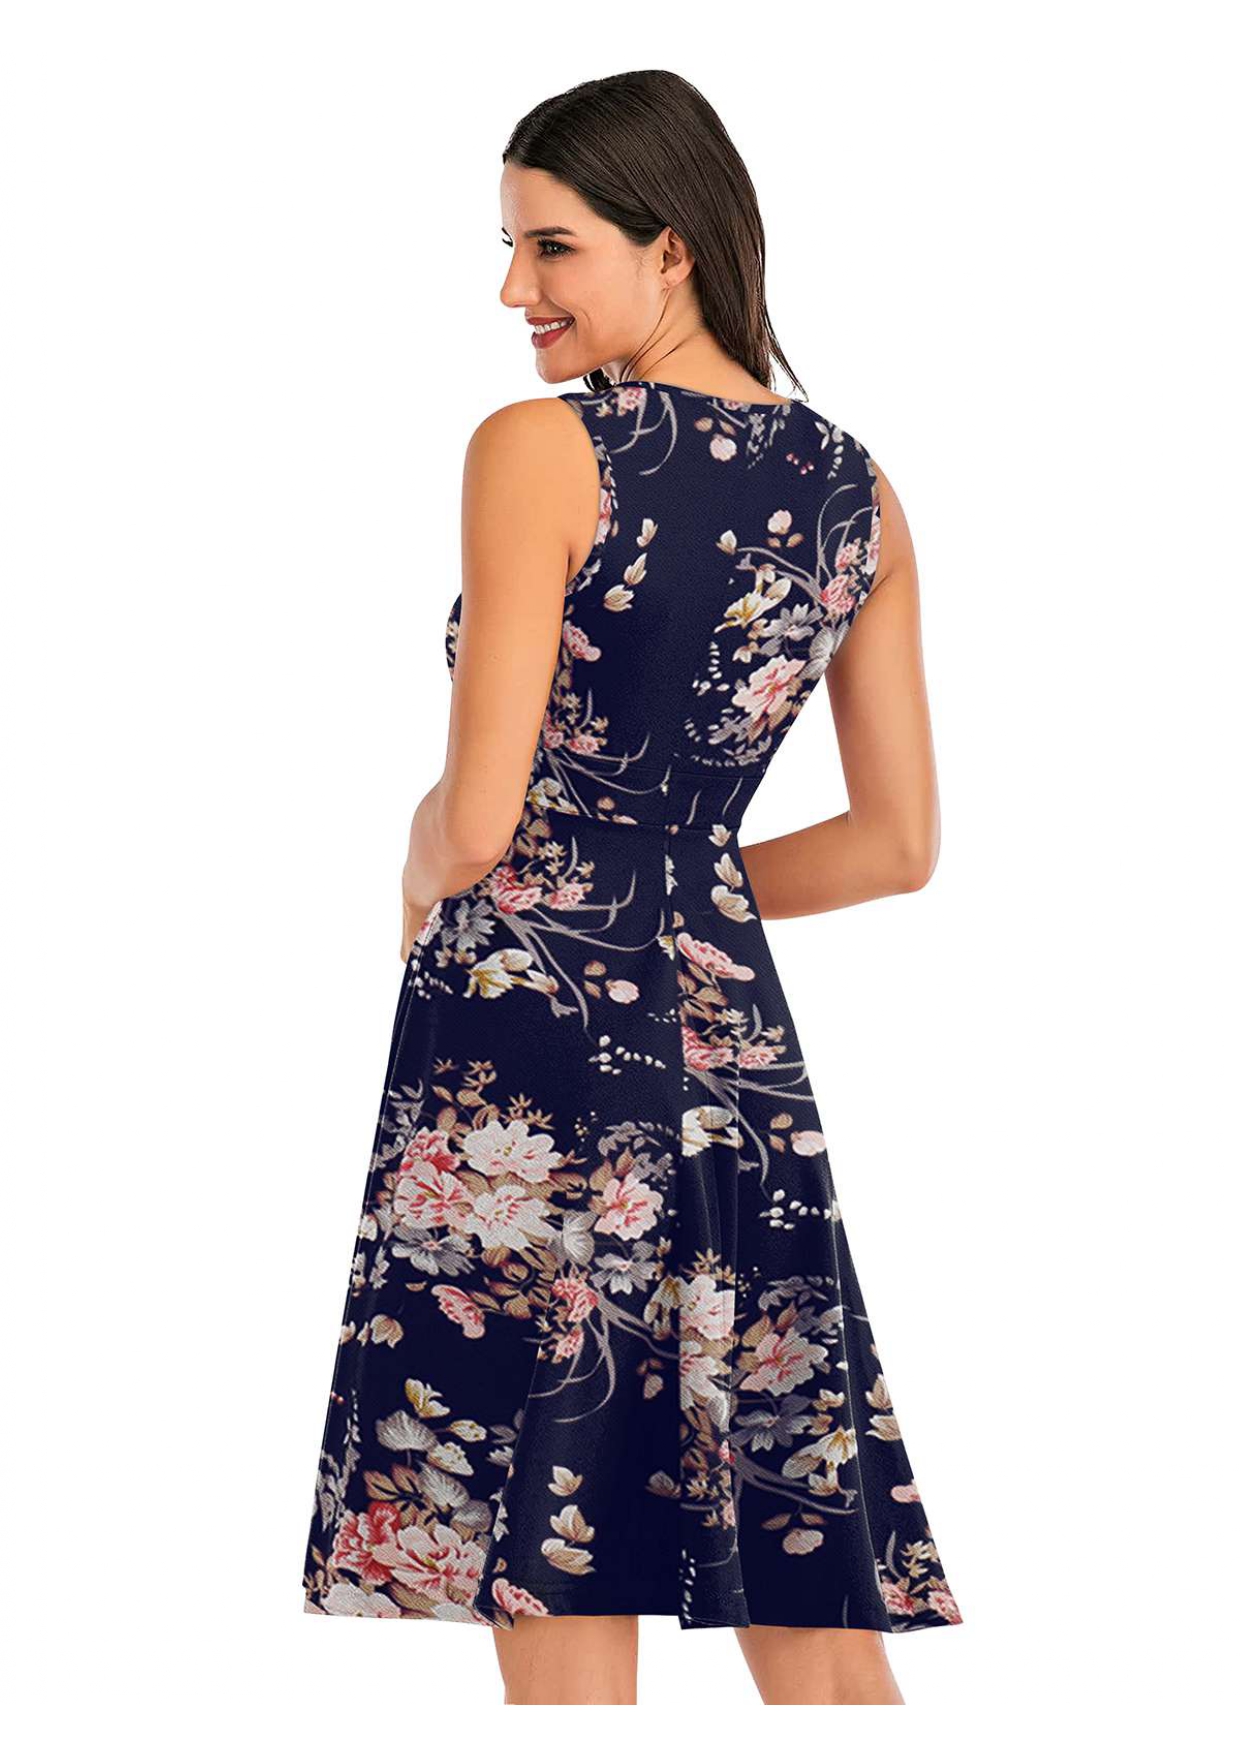 Knee-Length Floral Dresses for Women